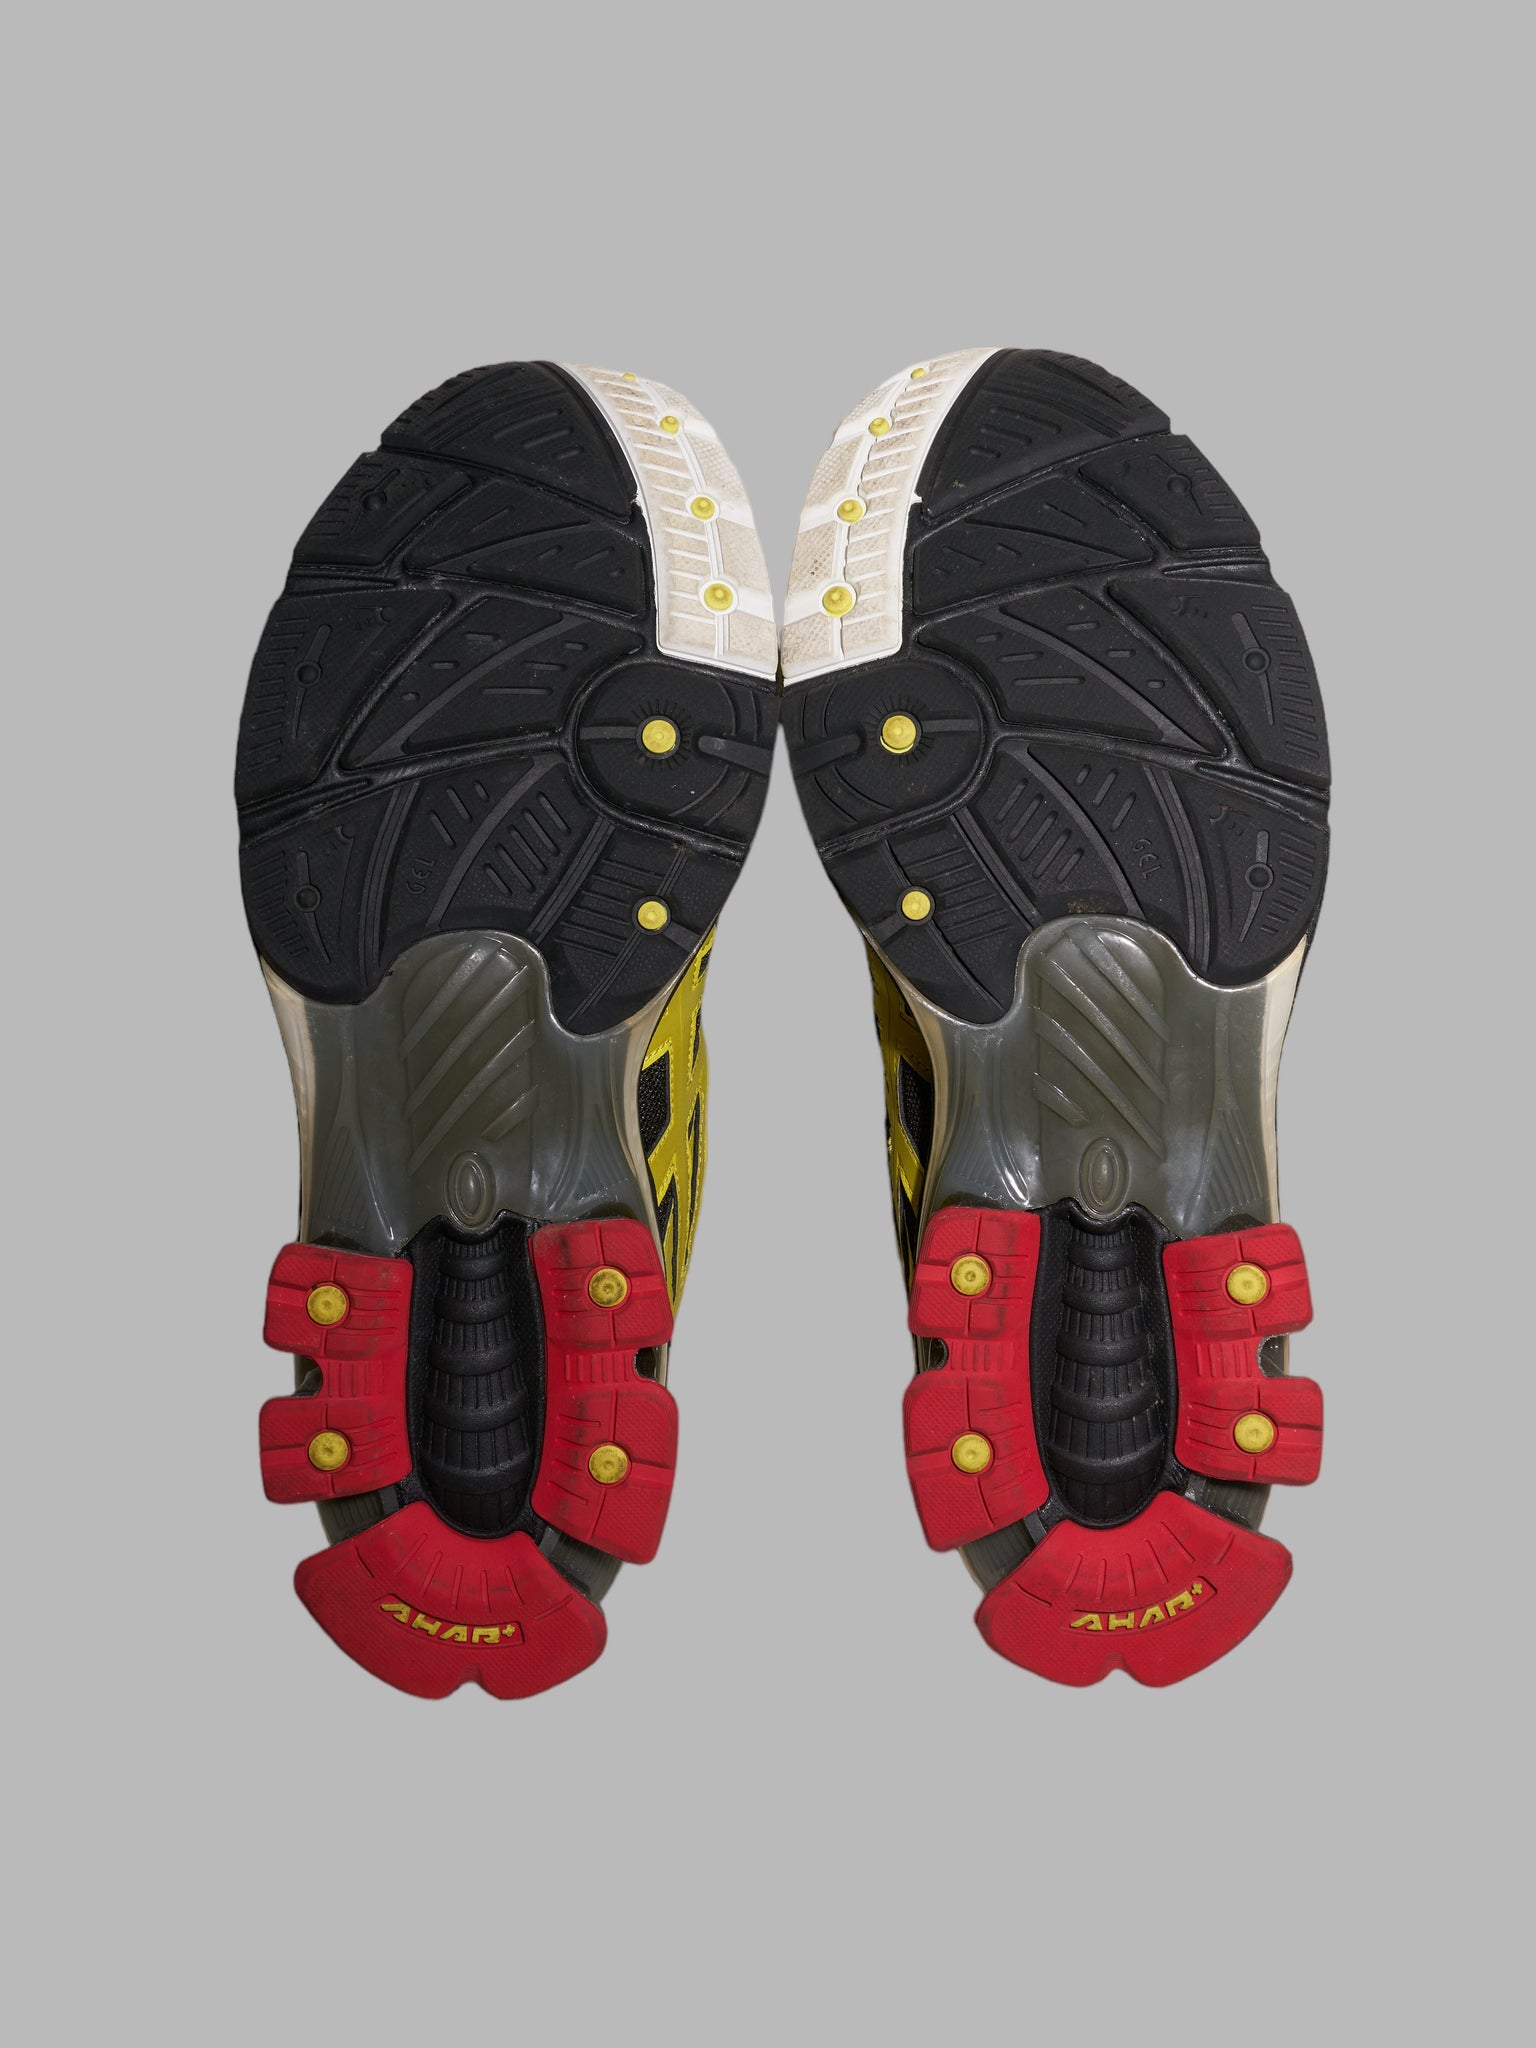 Asics x Affix Kiko Kostadinov Gel-Kinsei OG Brown Stone Kelp sneakers - US 11.5